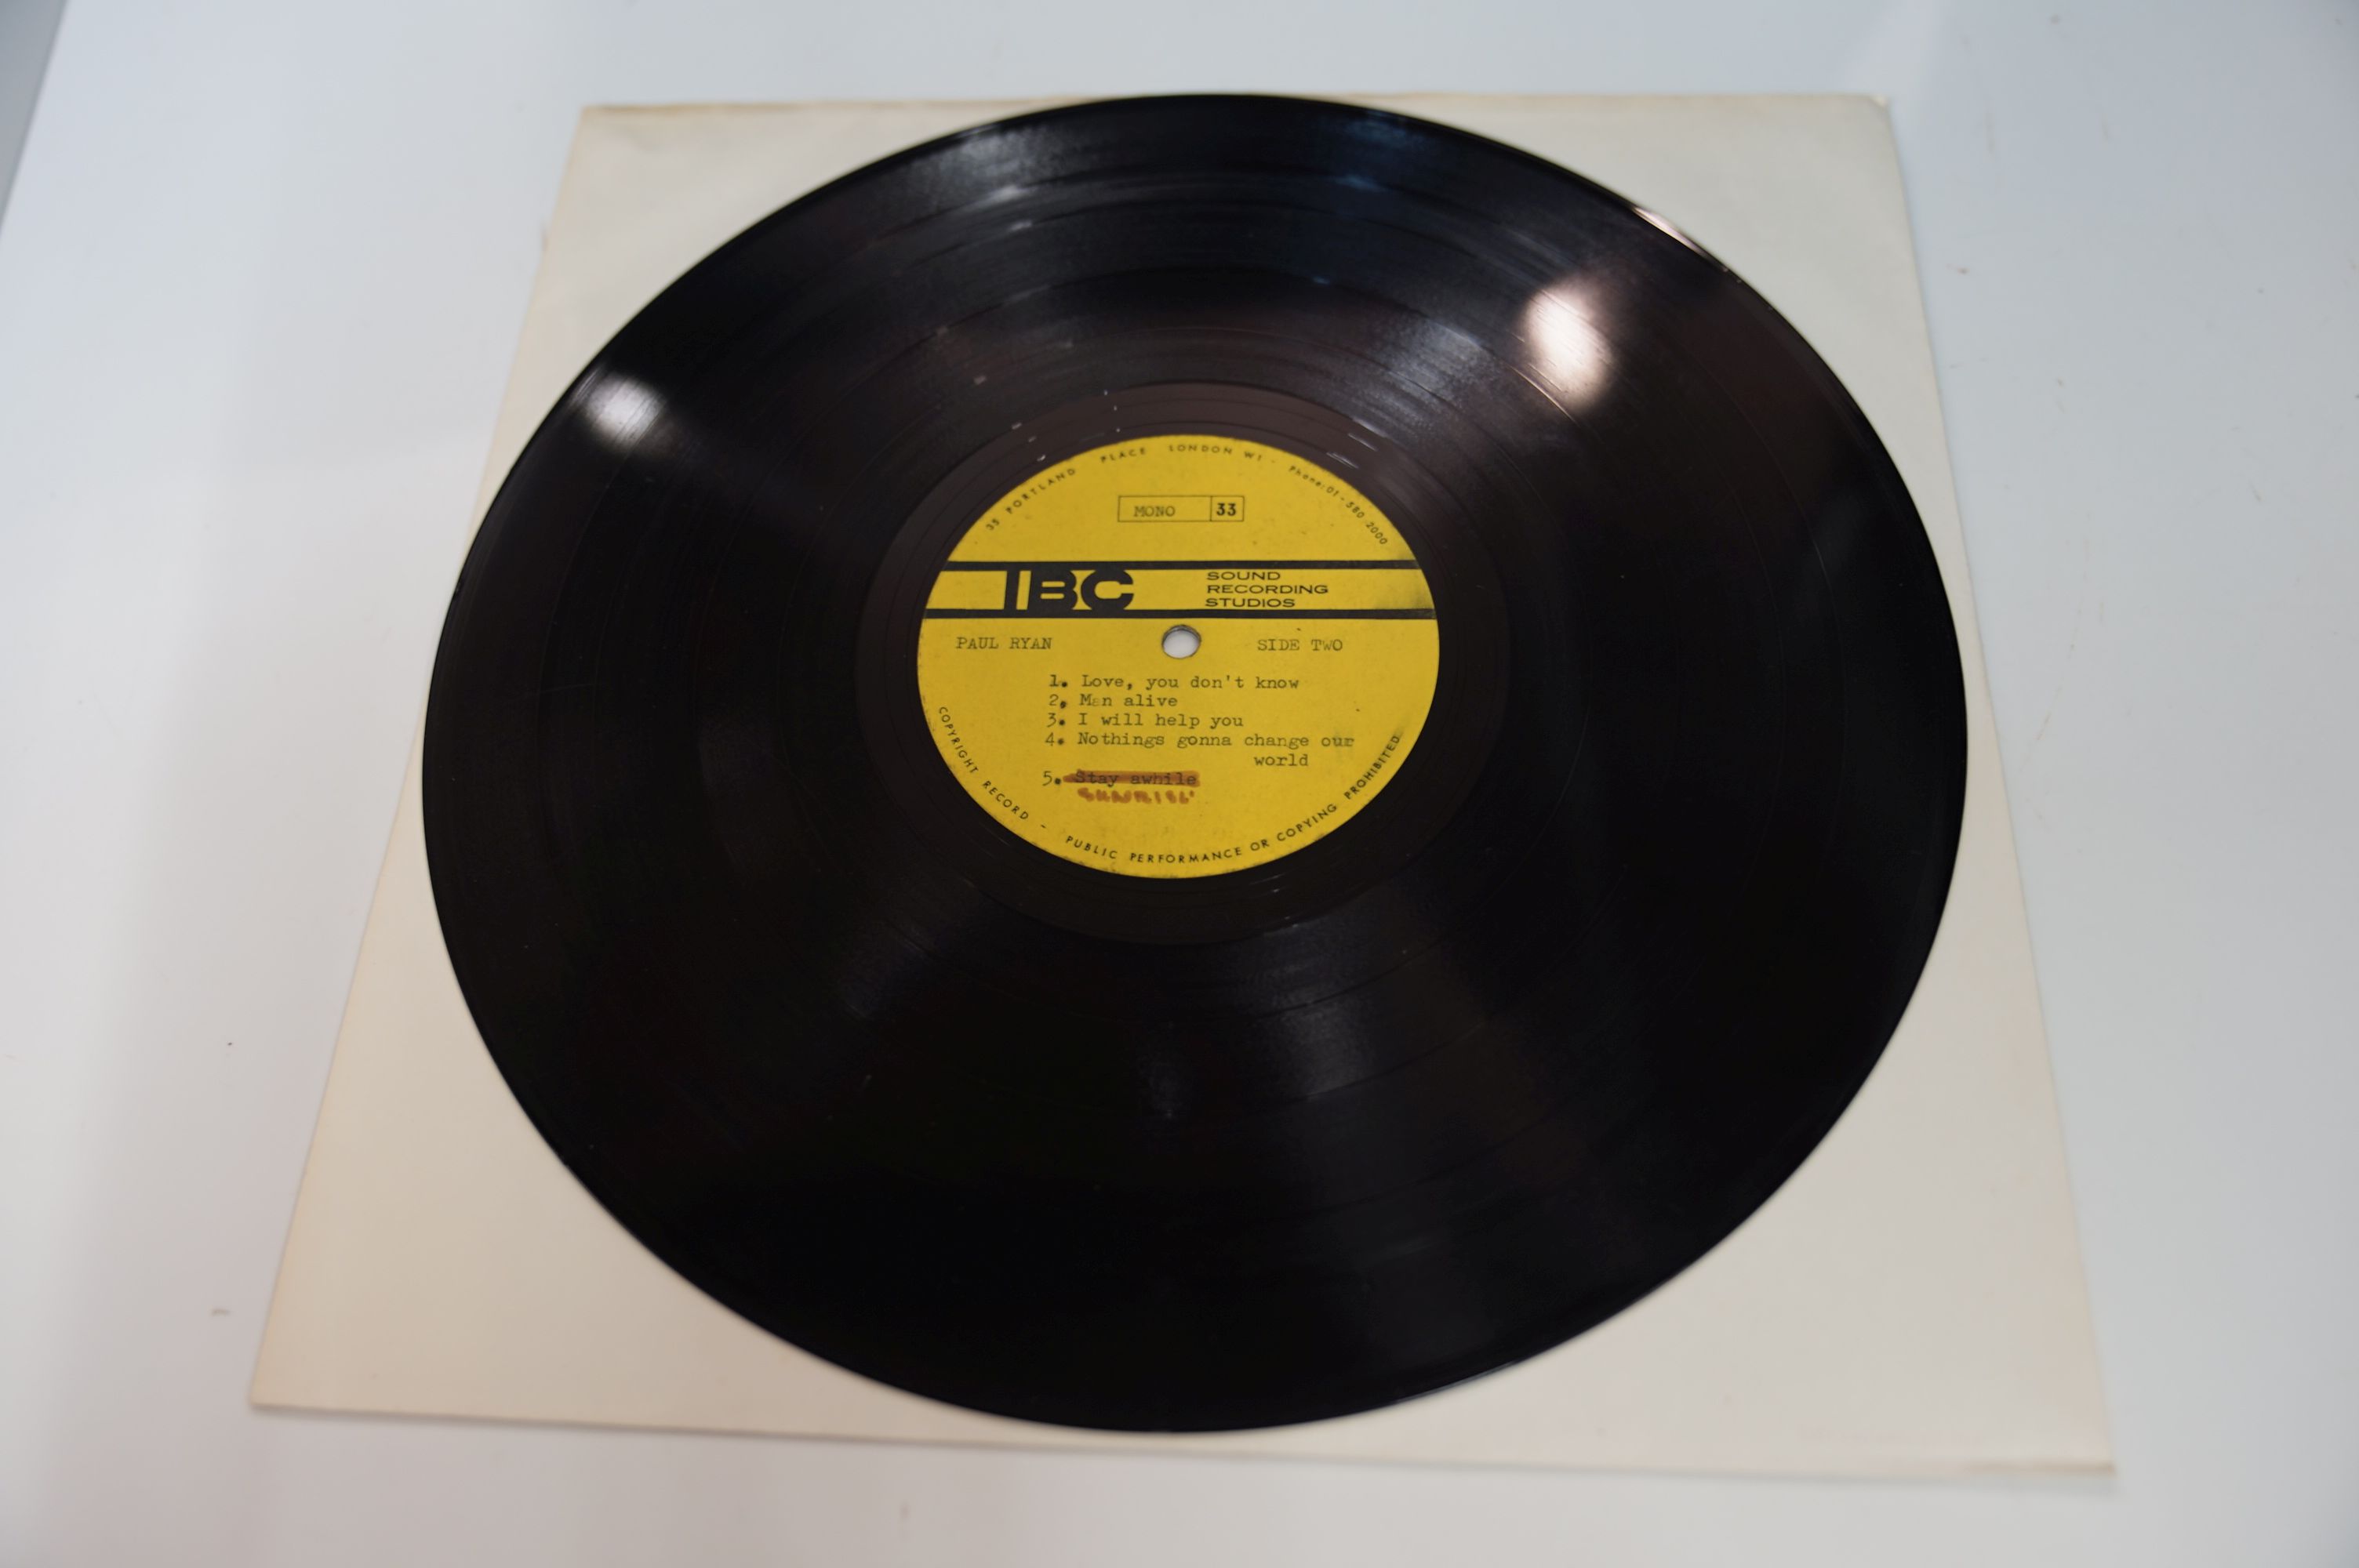 VINYL - PAUL RYAN - AMAZING UNIQUE UNRELEASED 1969 ALBUM DOUBLE SIDED ACETATE. WOW, IT DOES NOT - Image 4 of 5